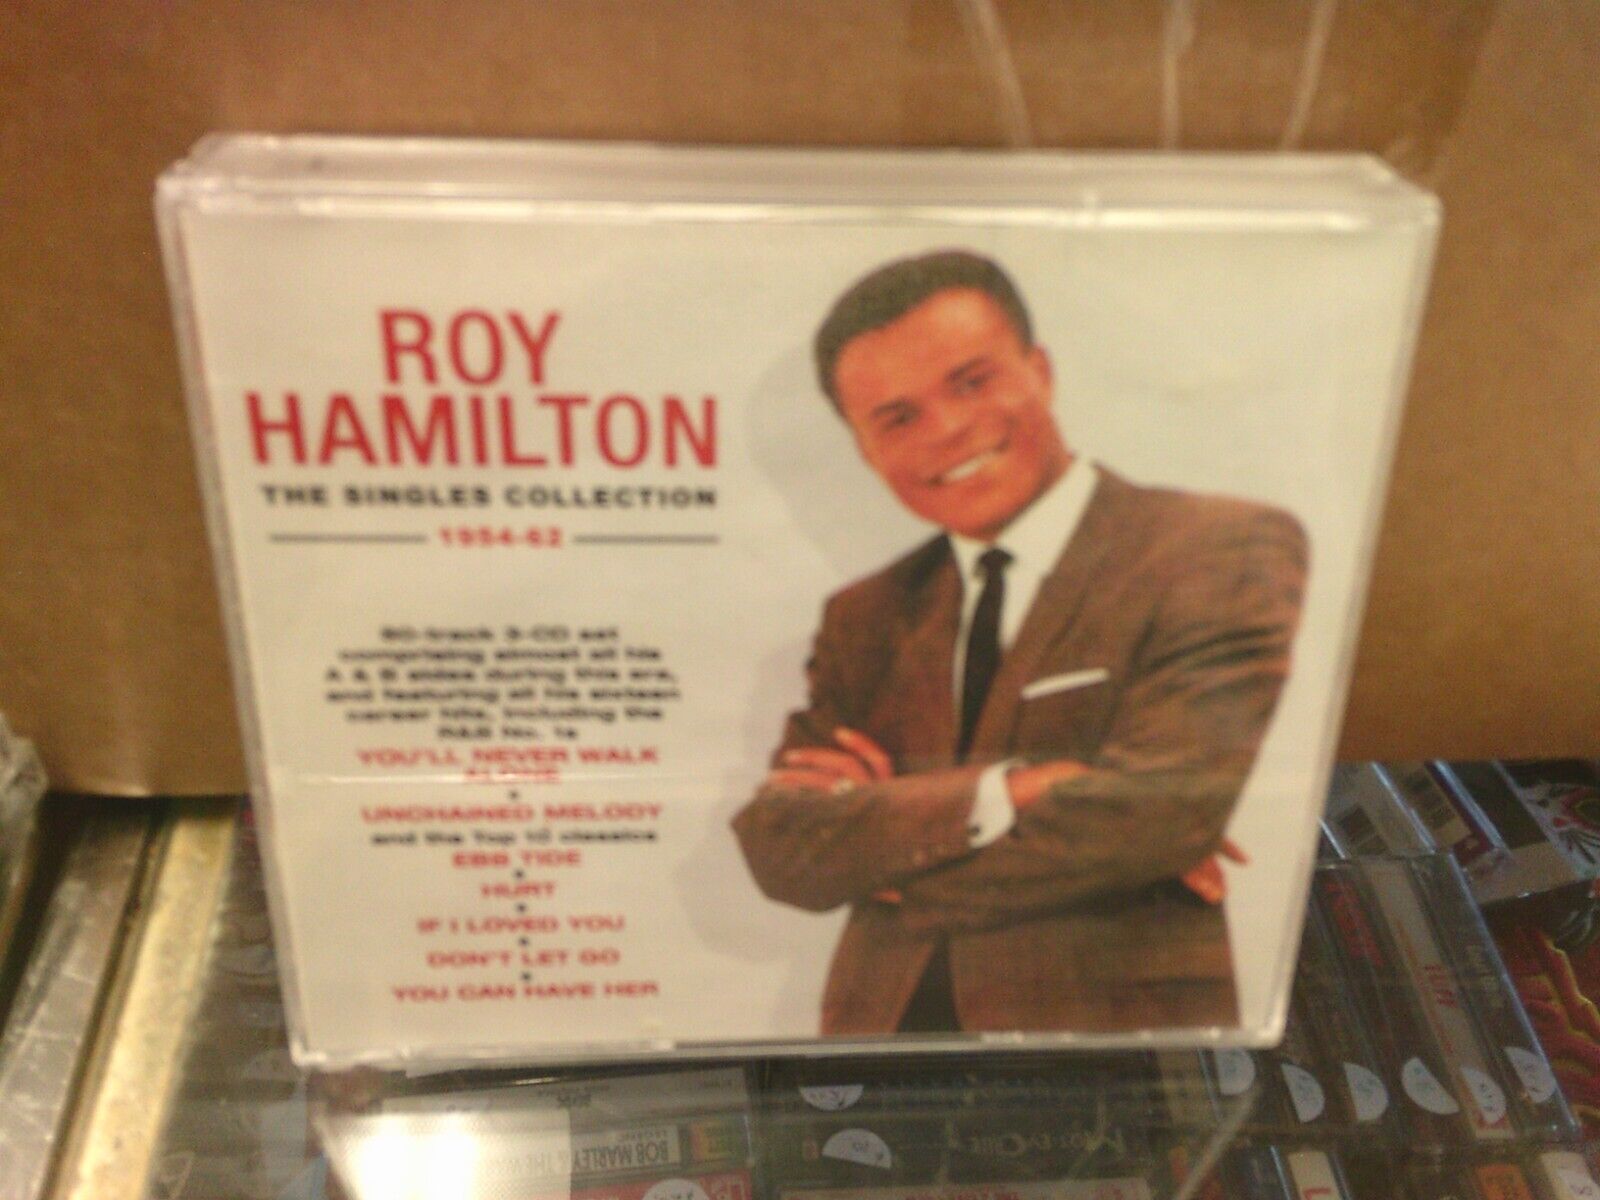 Roy Hamilton Singles Collection Greatest 54-62 3x CD-r 2018 Acrobat VG+ R&B Pop